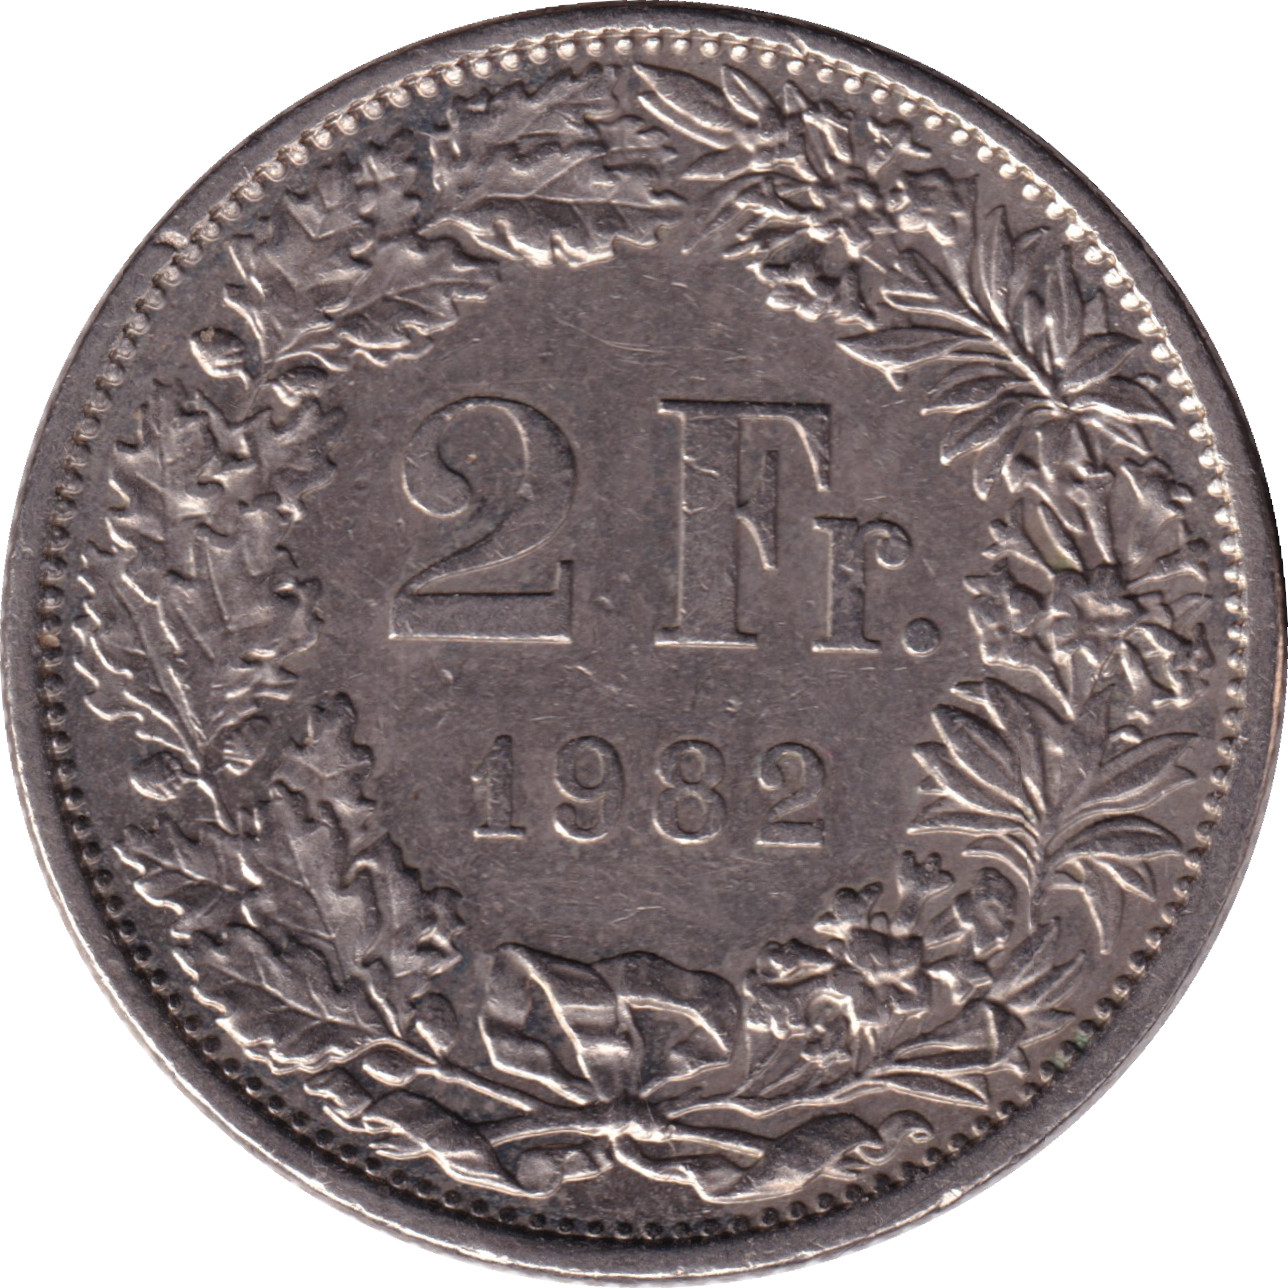 2 francs - Standing Helvetia